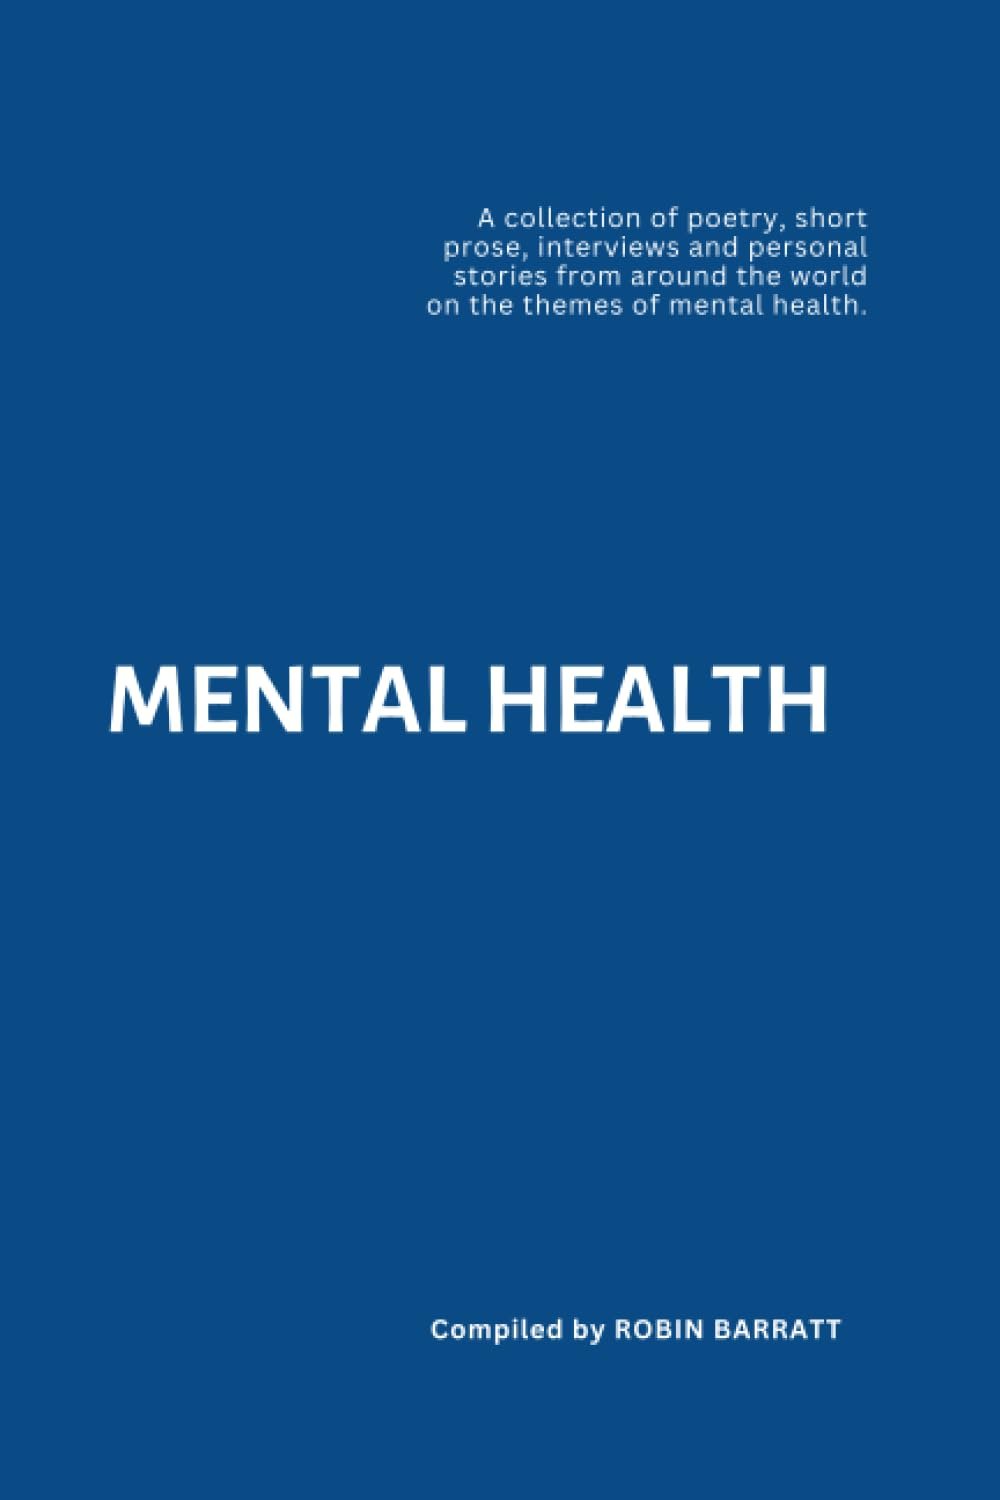 mental health book2.jpg